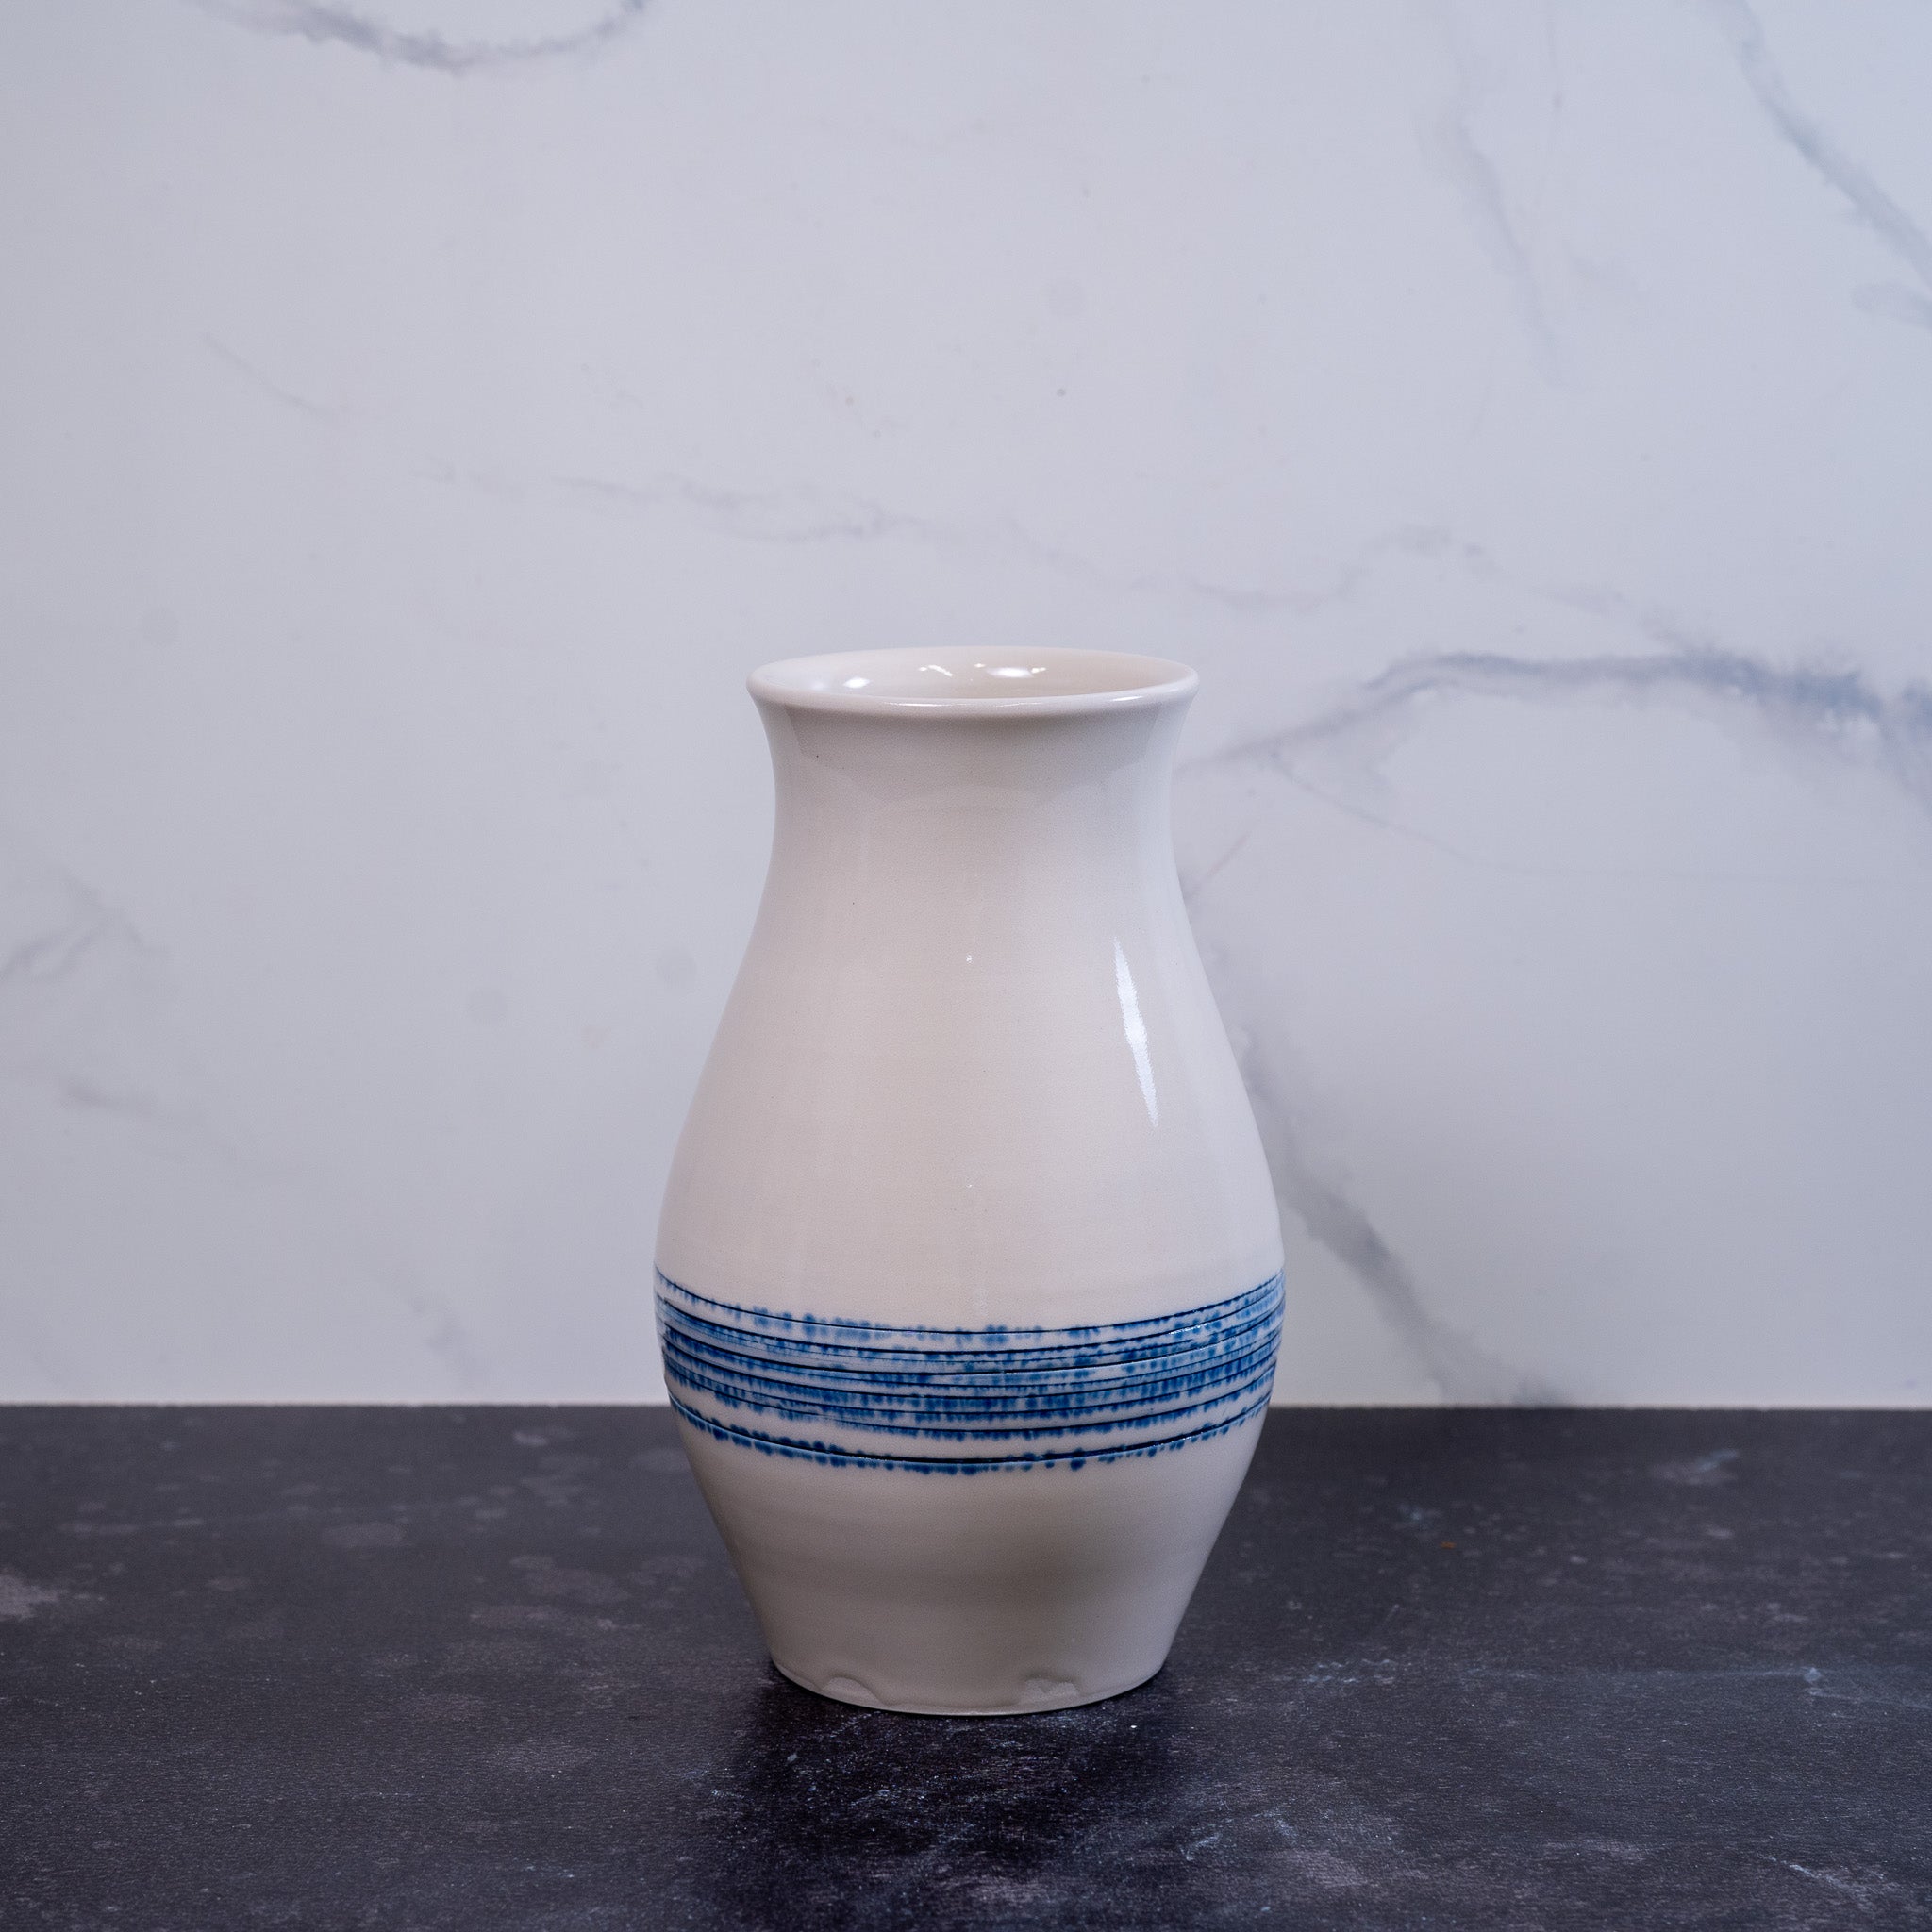 Ltd. Edition Vase 2023-019